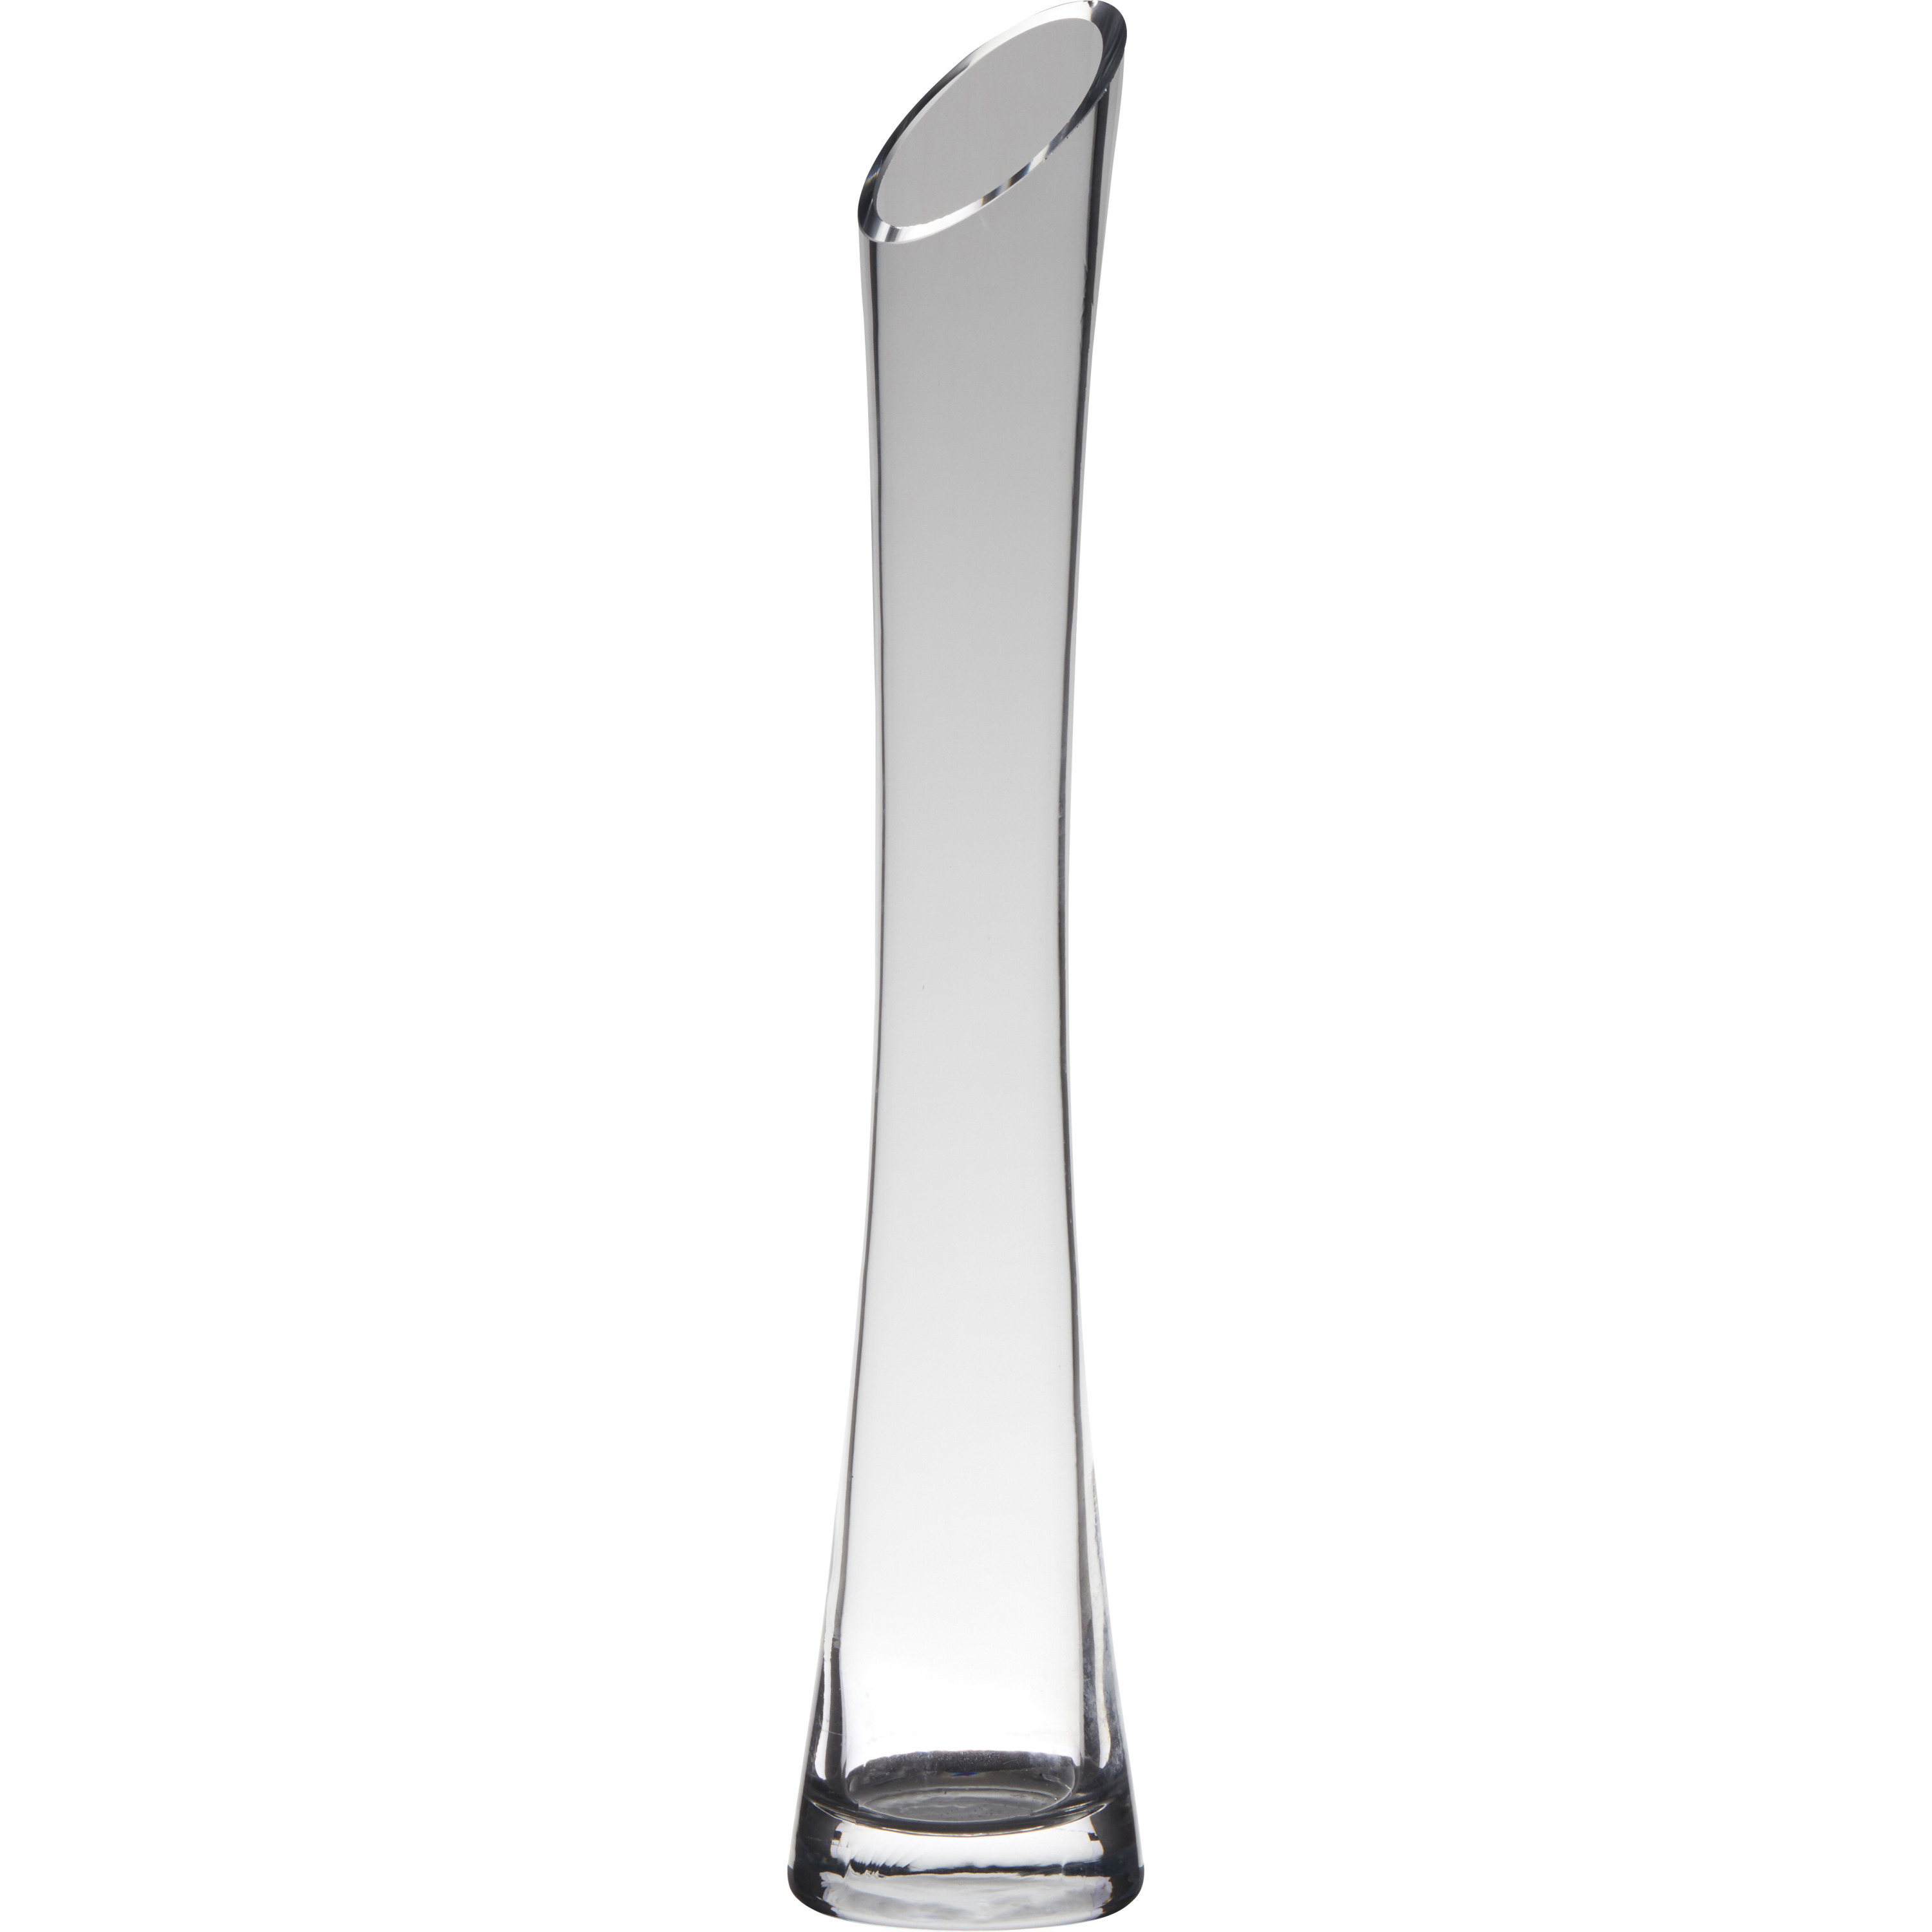 Merkloos Transparante flutes vaas/vazen van glas 35 x 7 cm -